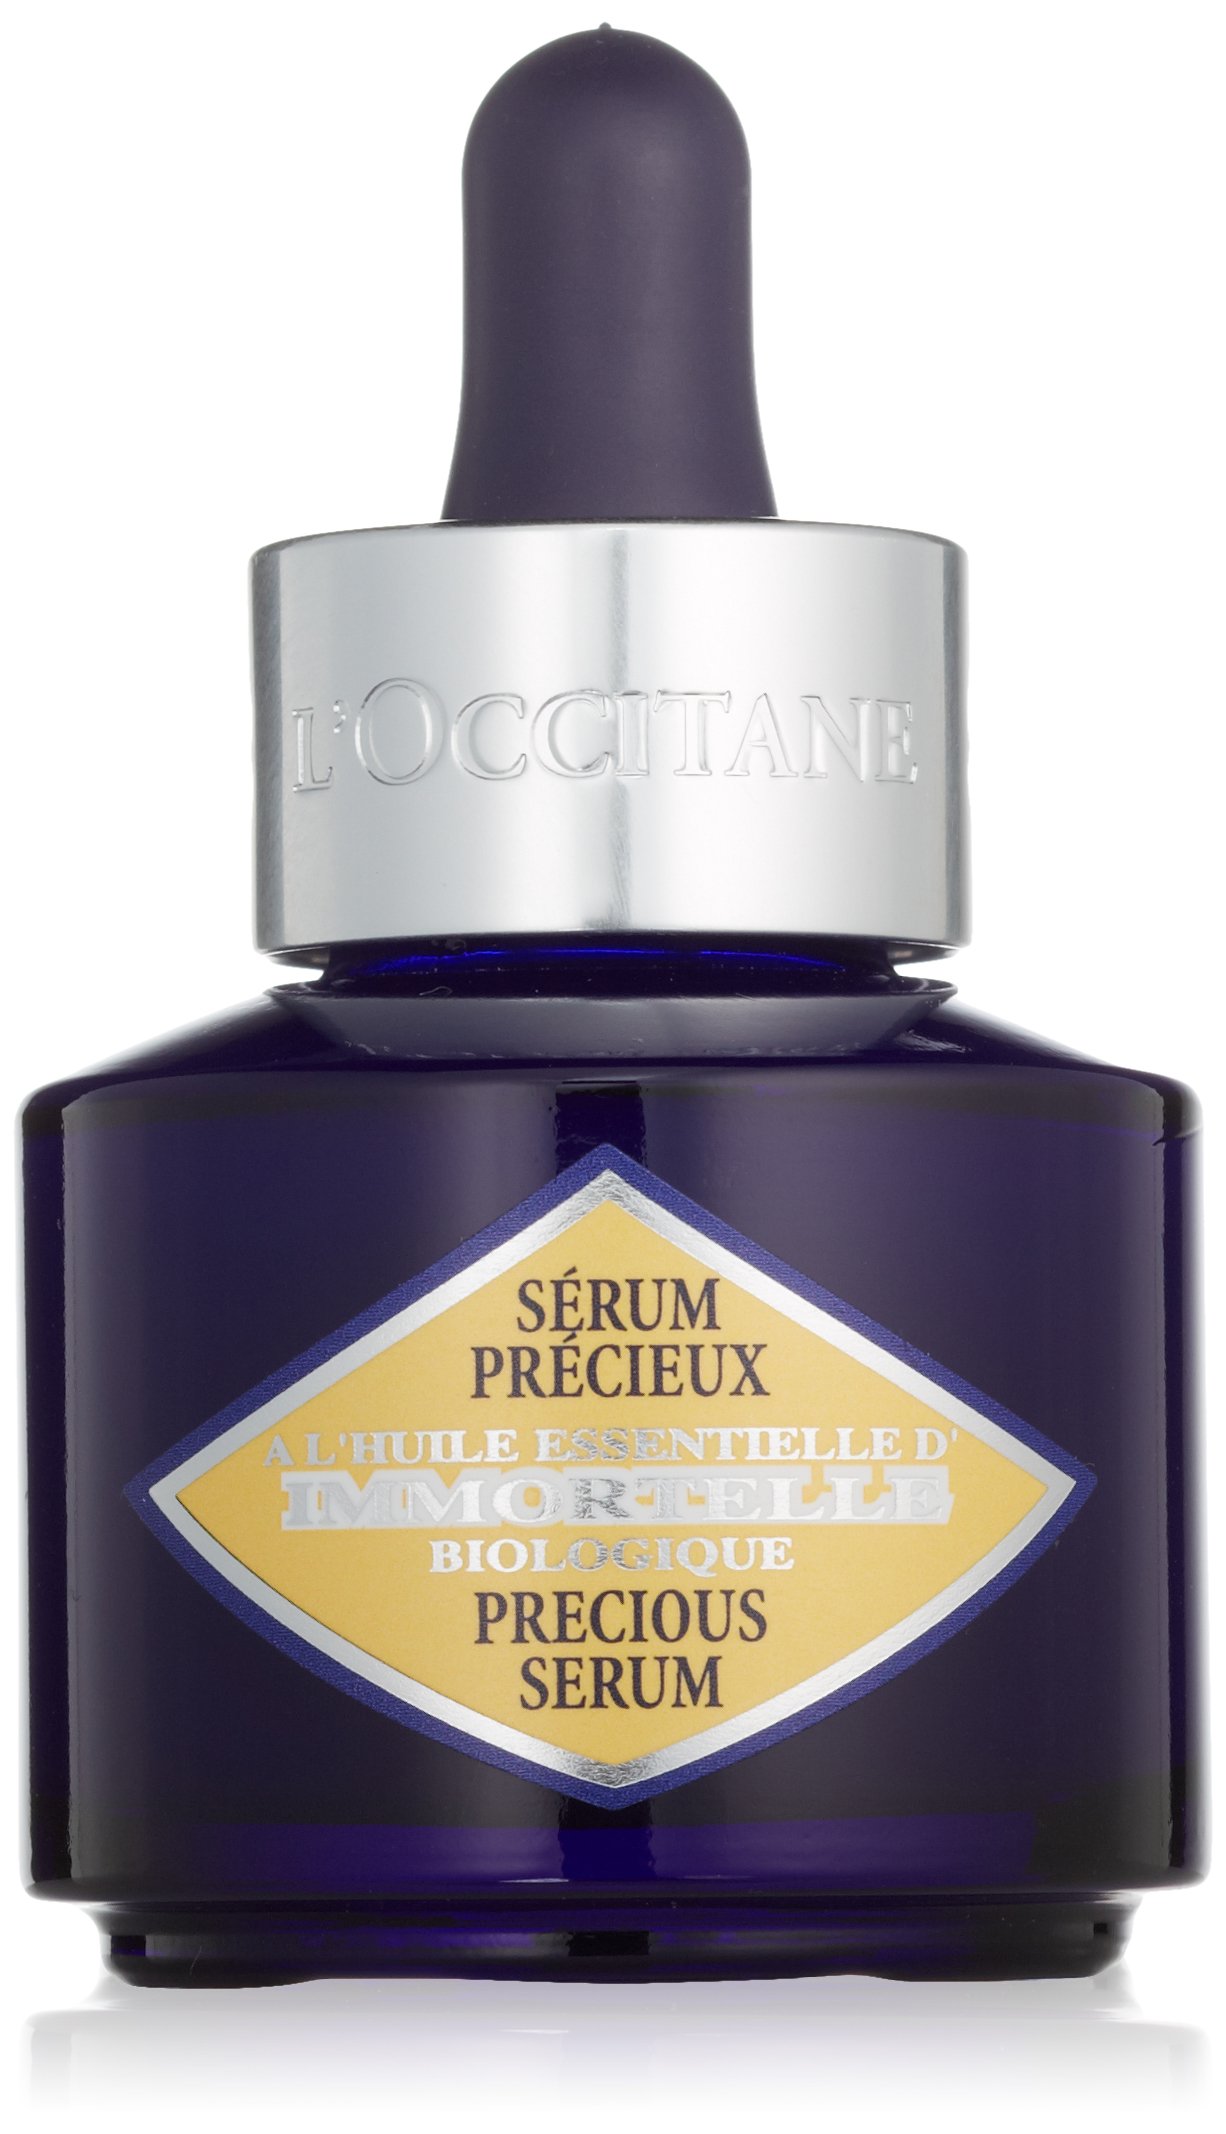 l occitane immortelle precious serum review